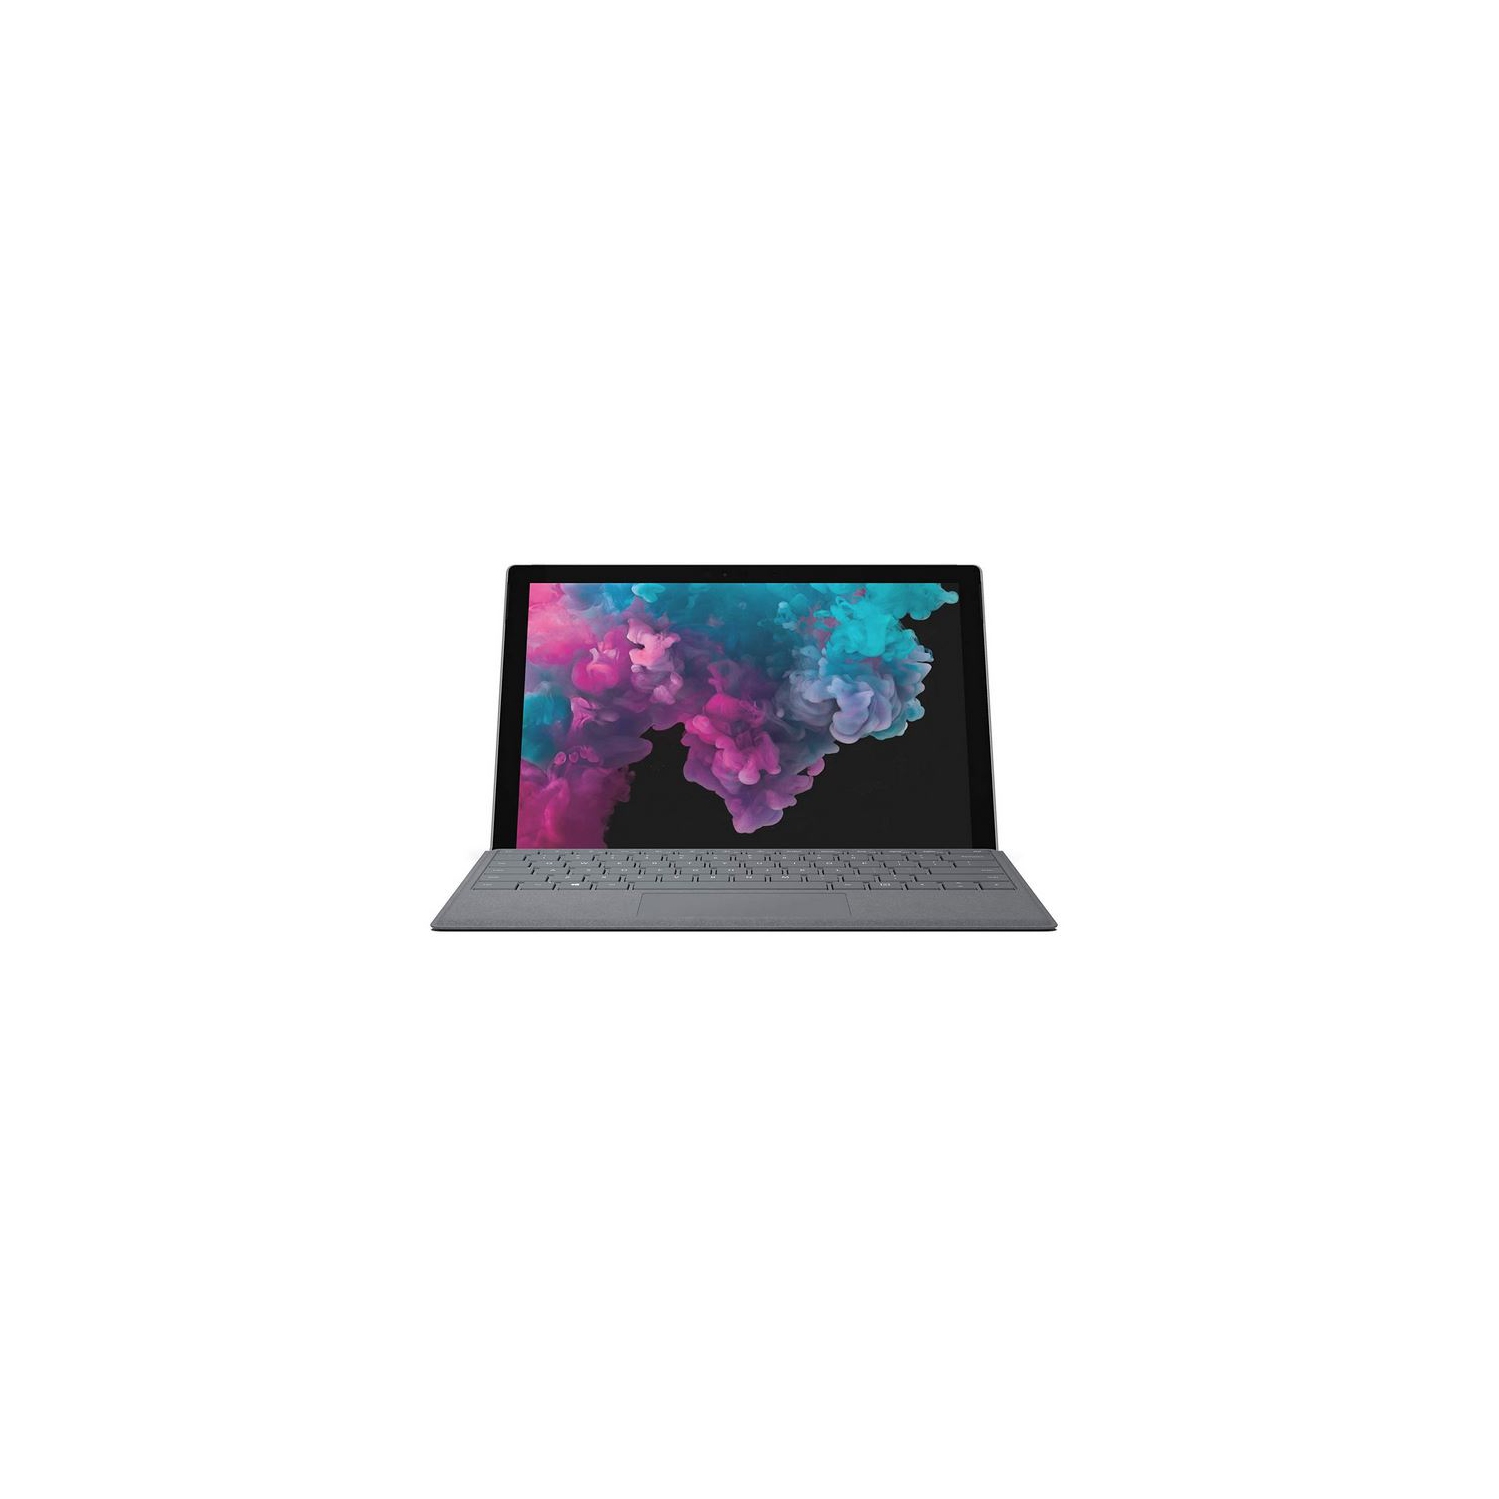 Refurbished (Good) - Microsoft Surface Pro 6 12.3" Tablet (Intel Core i5-8350U 1.7GHz, 8GB RAM, 256GB SSD, Windows 10 Pro, (With Keyboard)